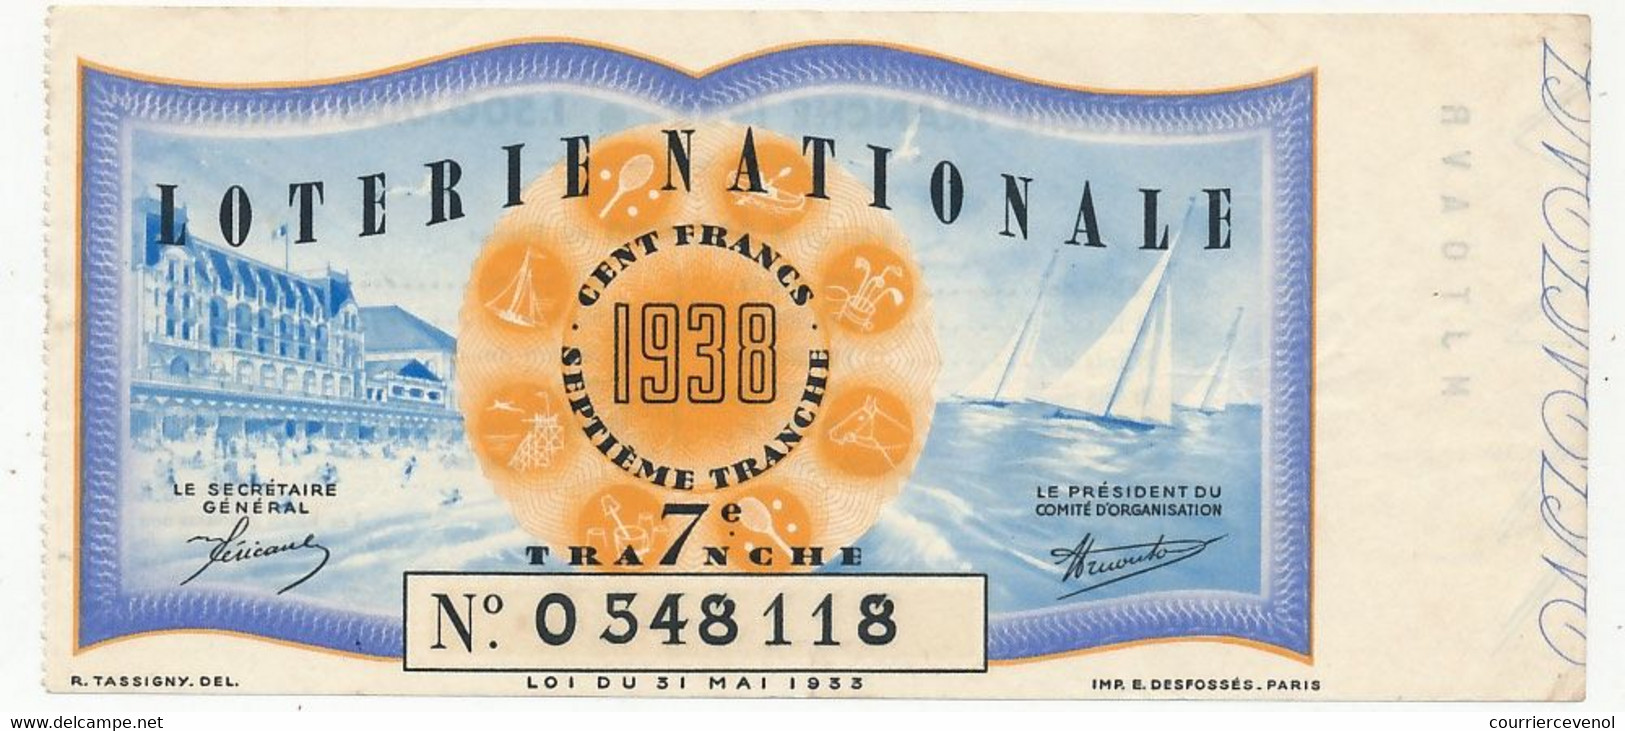 FRANCE - Loterie Nationale - Billet Entier - 7eme Tranche 1938 (Illustration Bord De Mer) - Lottery Tickets